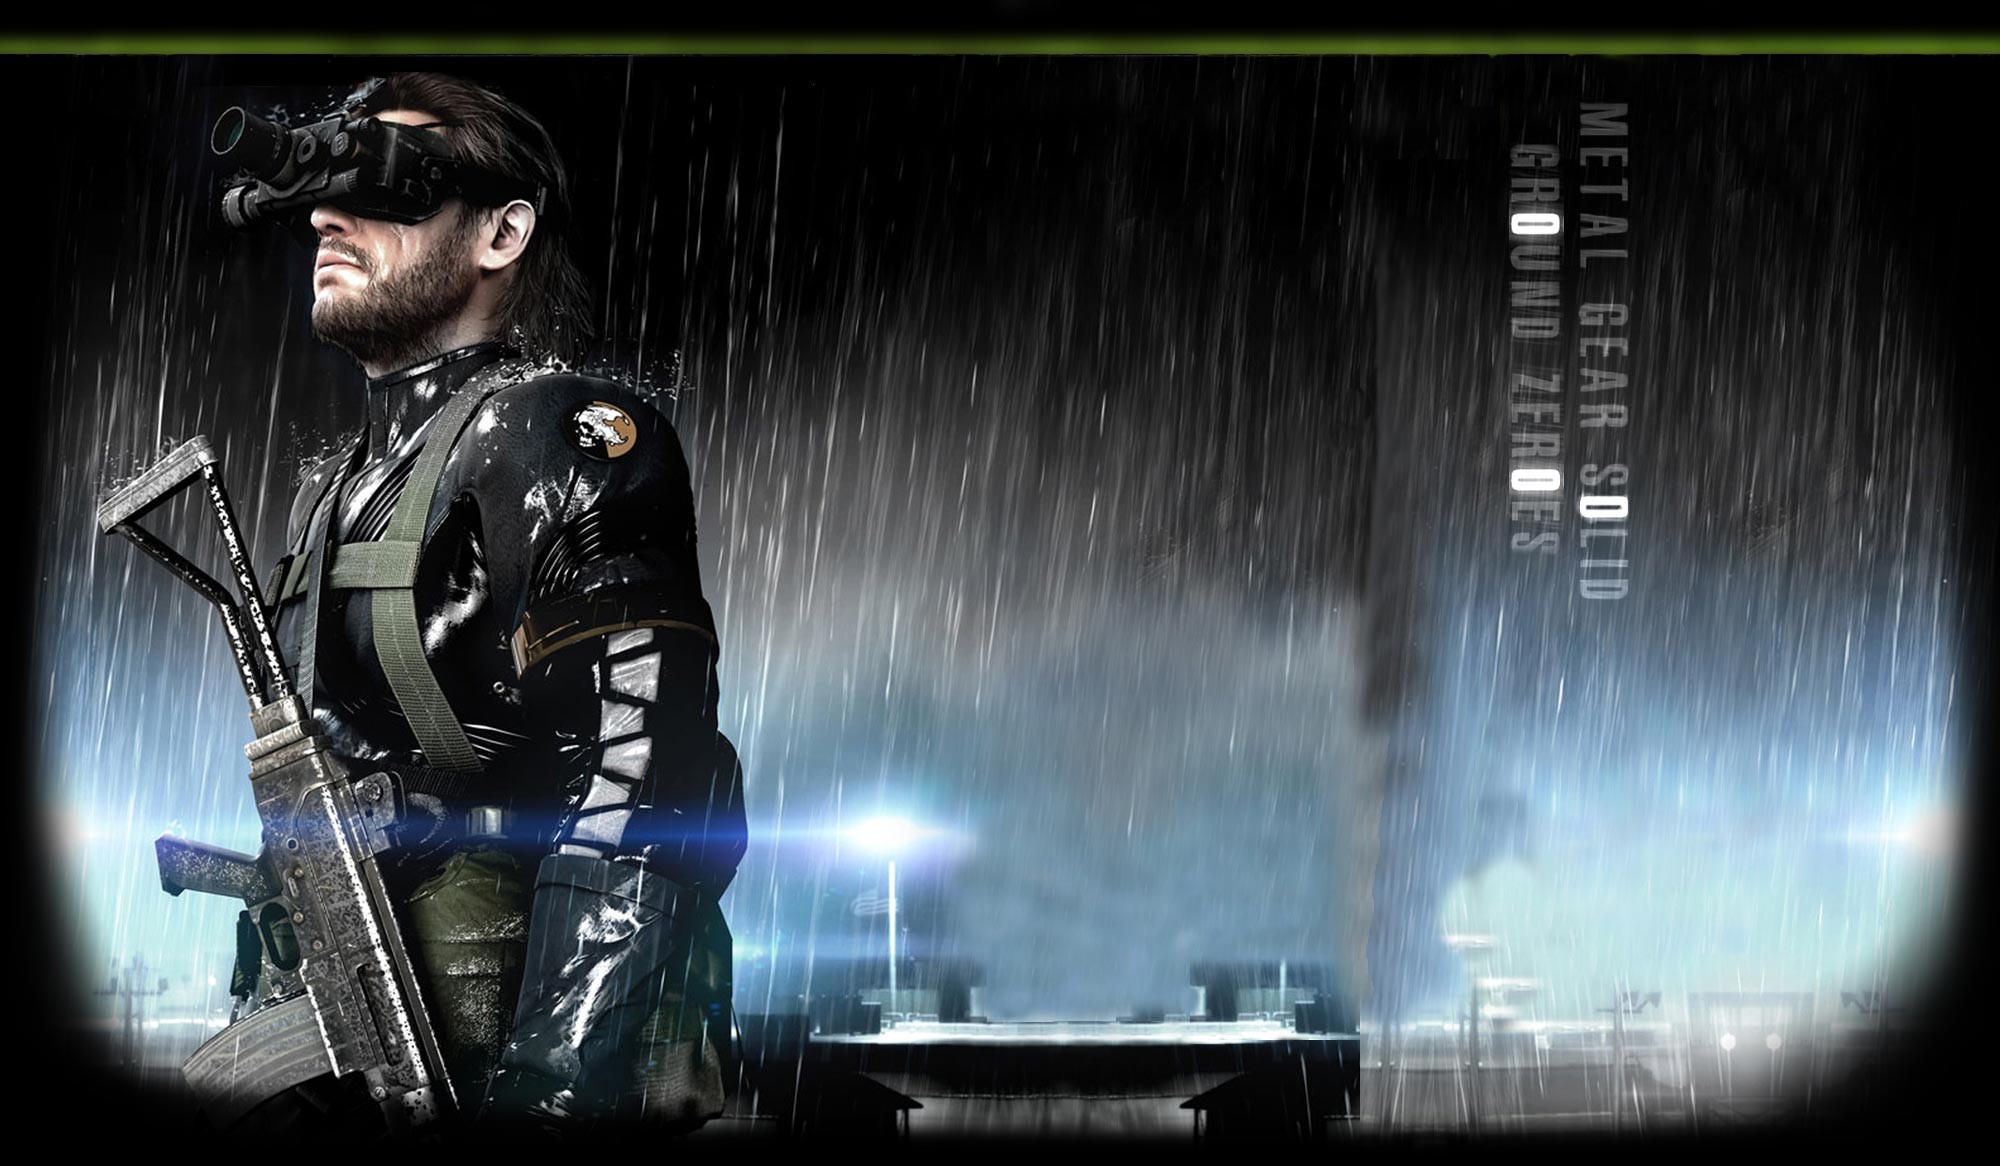 HD Metal Gear Solid: Ground Zeroes Wallpaper for Desktop Background – 133575